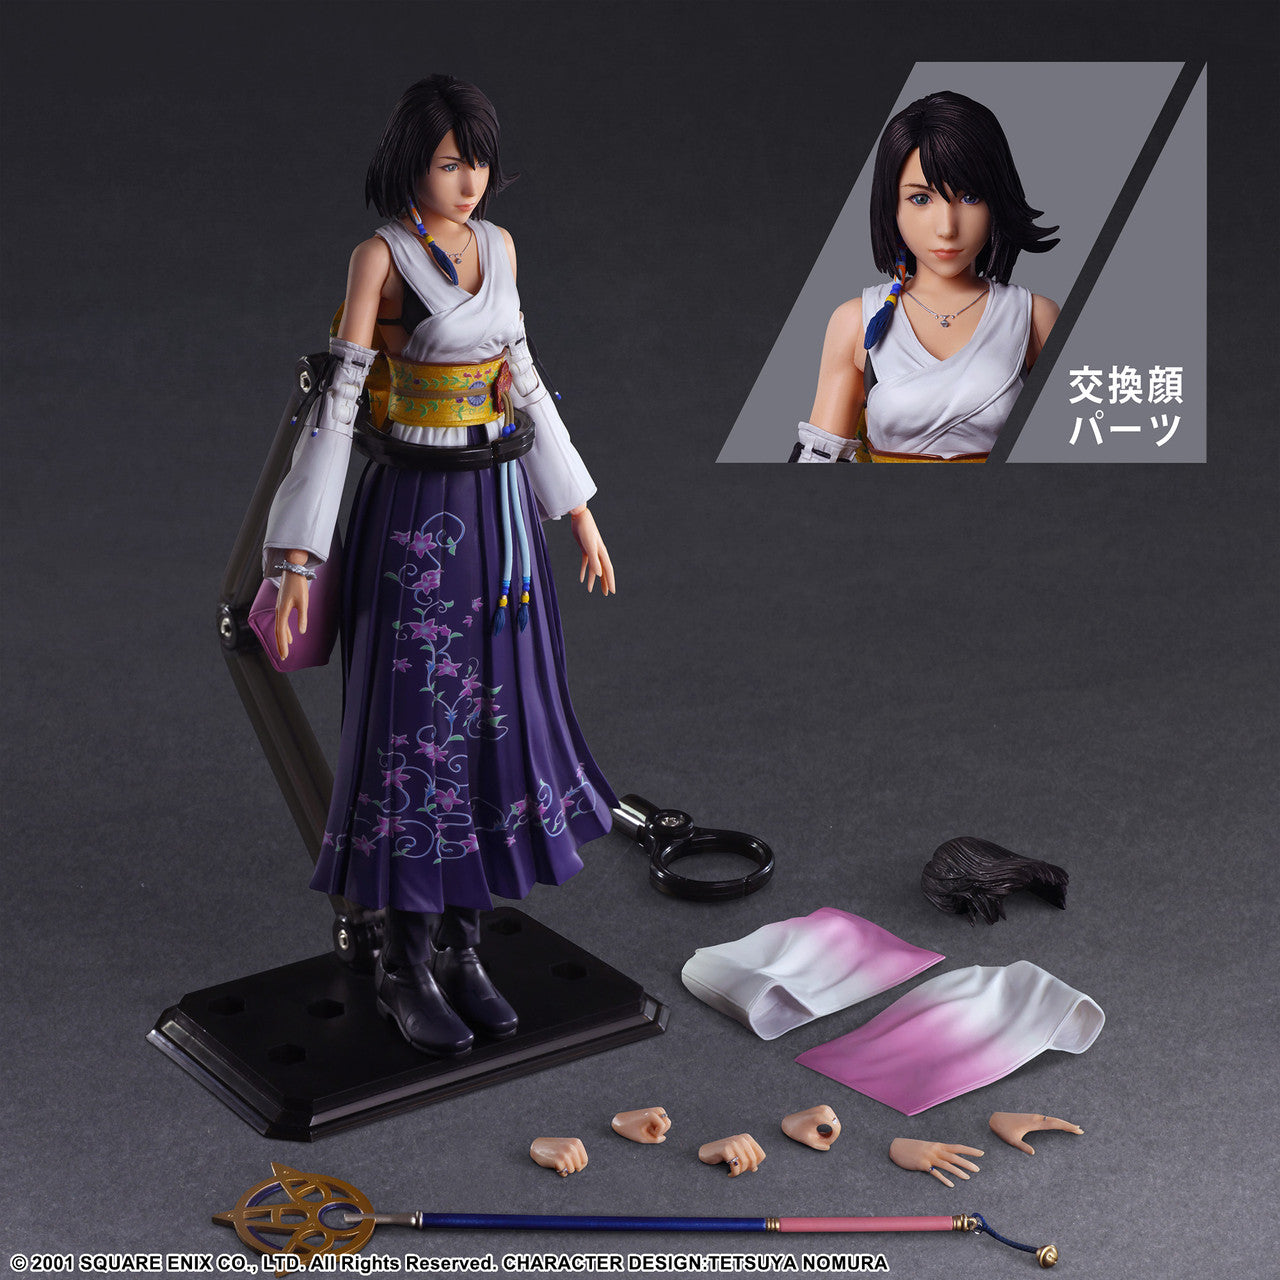 (Pre-Order) Play Arts Kai Final Fantasy X (10) Yuna & Tidus Action Figure BUNDLE/LOT + Bonus